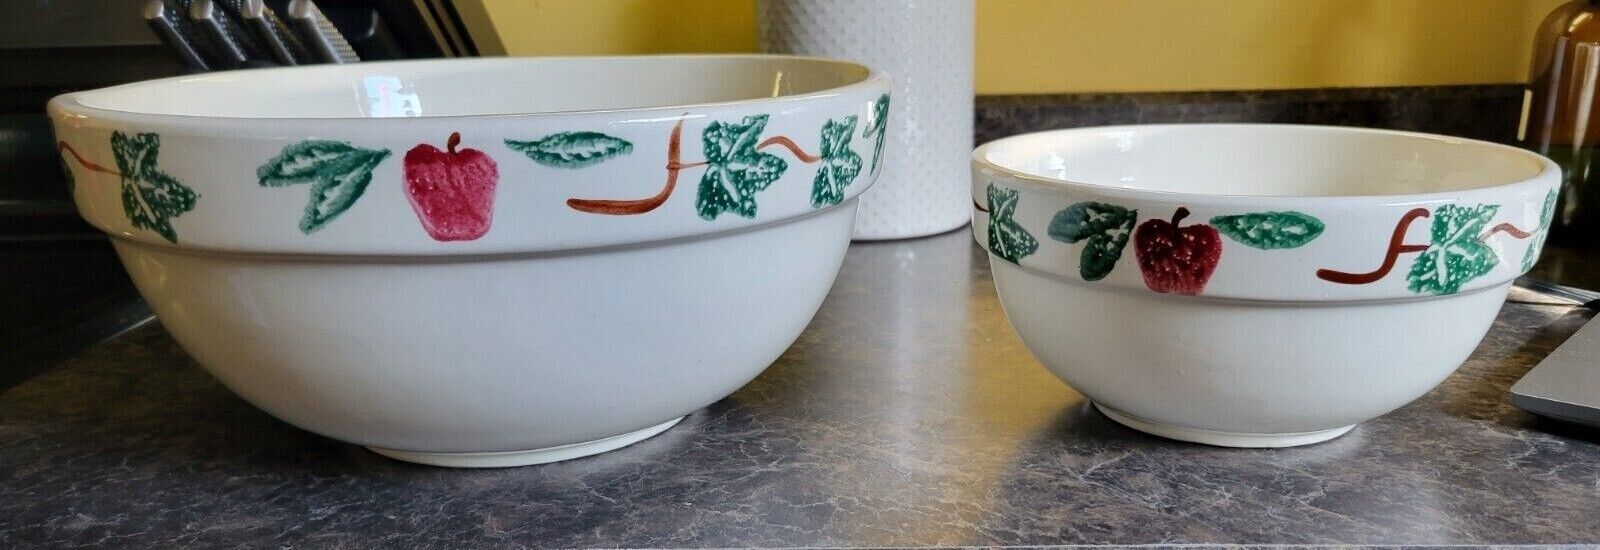 Crock Shop Santa Ana, CA Apples and Ivy Large and Small Ceramic Design Bowls